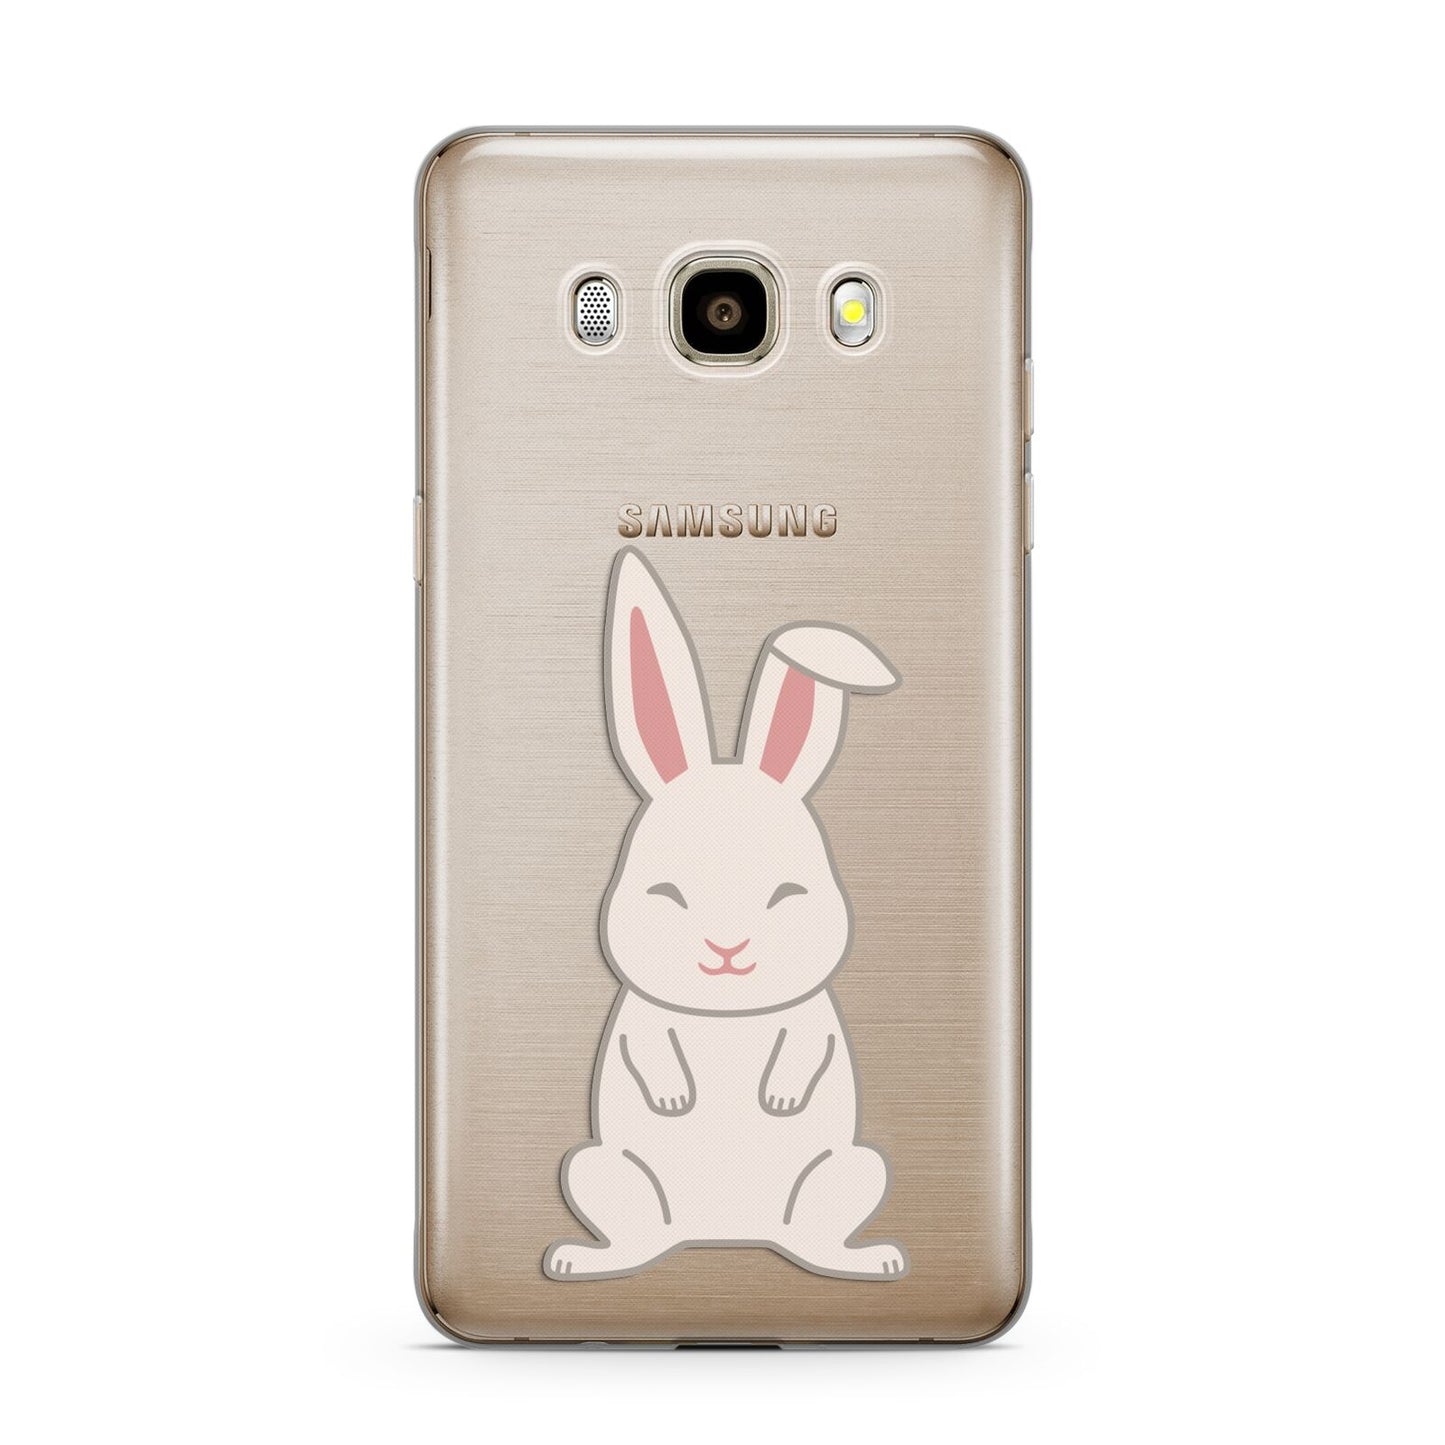 Bunny Samsung Galaxy J7 2016 Case on gold phone